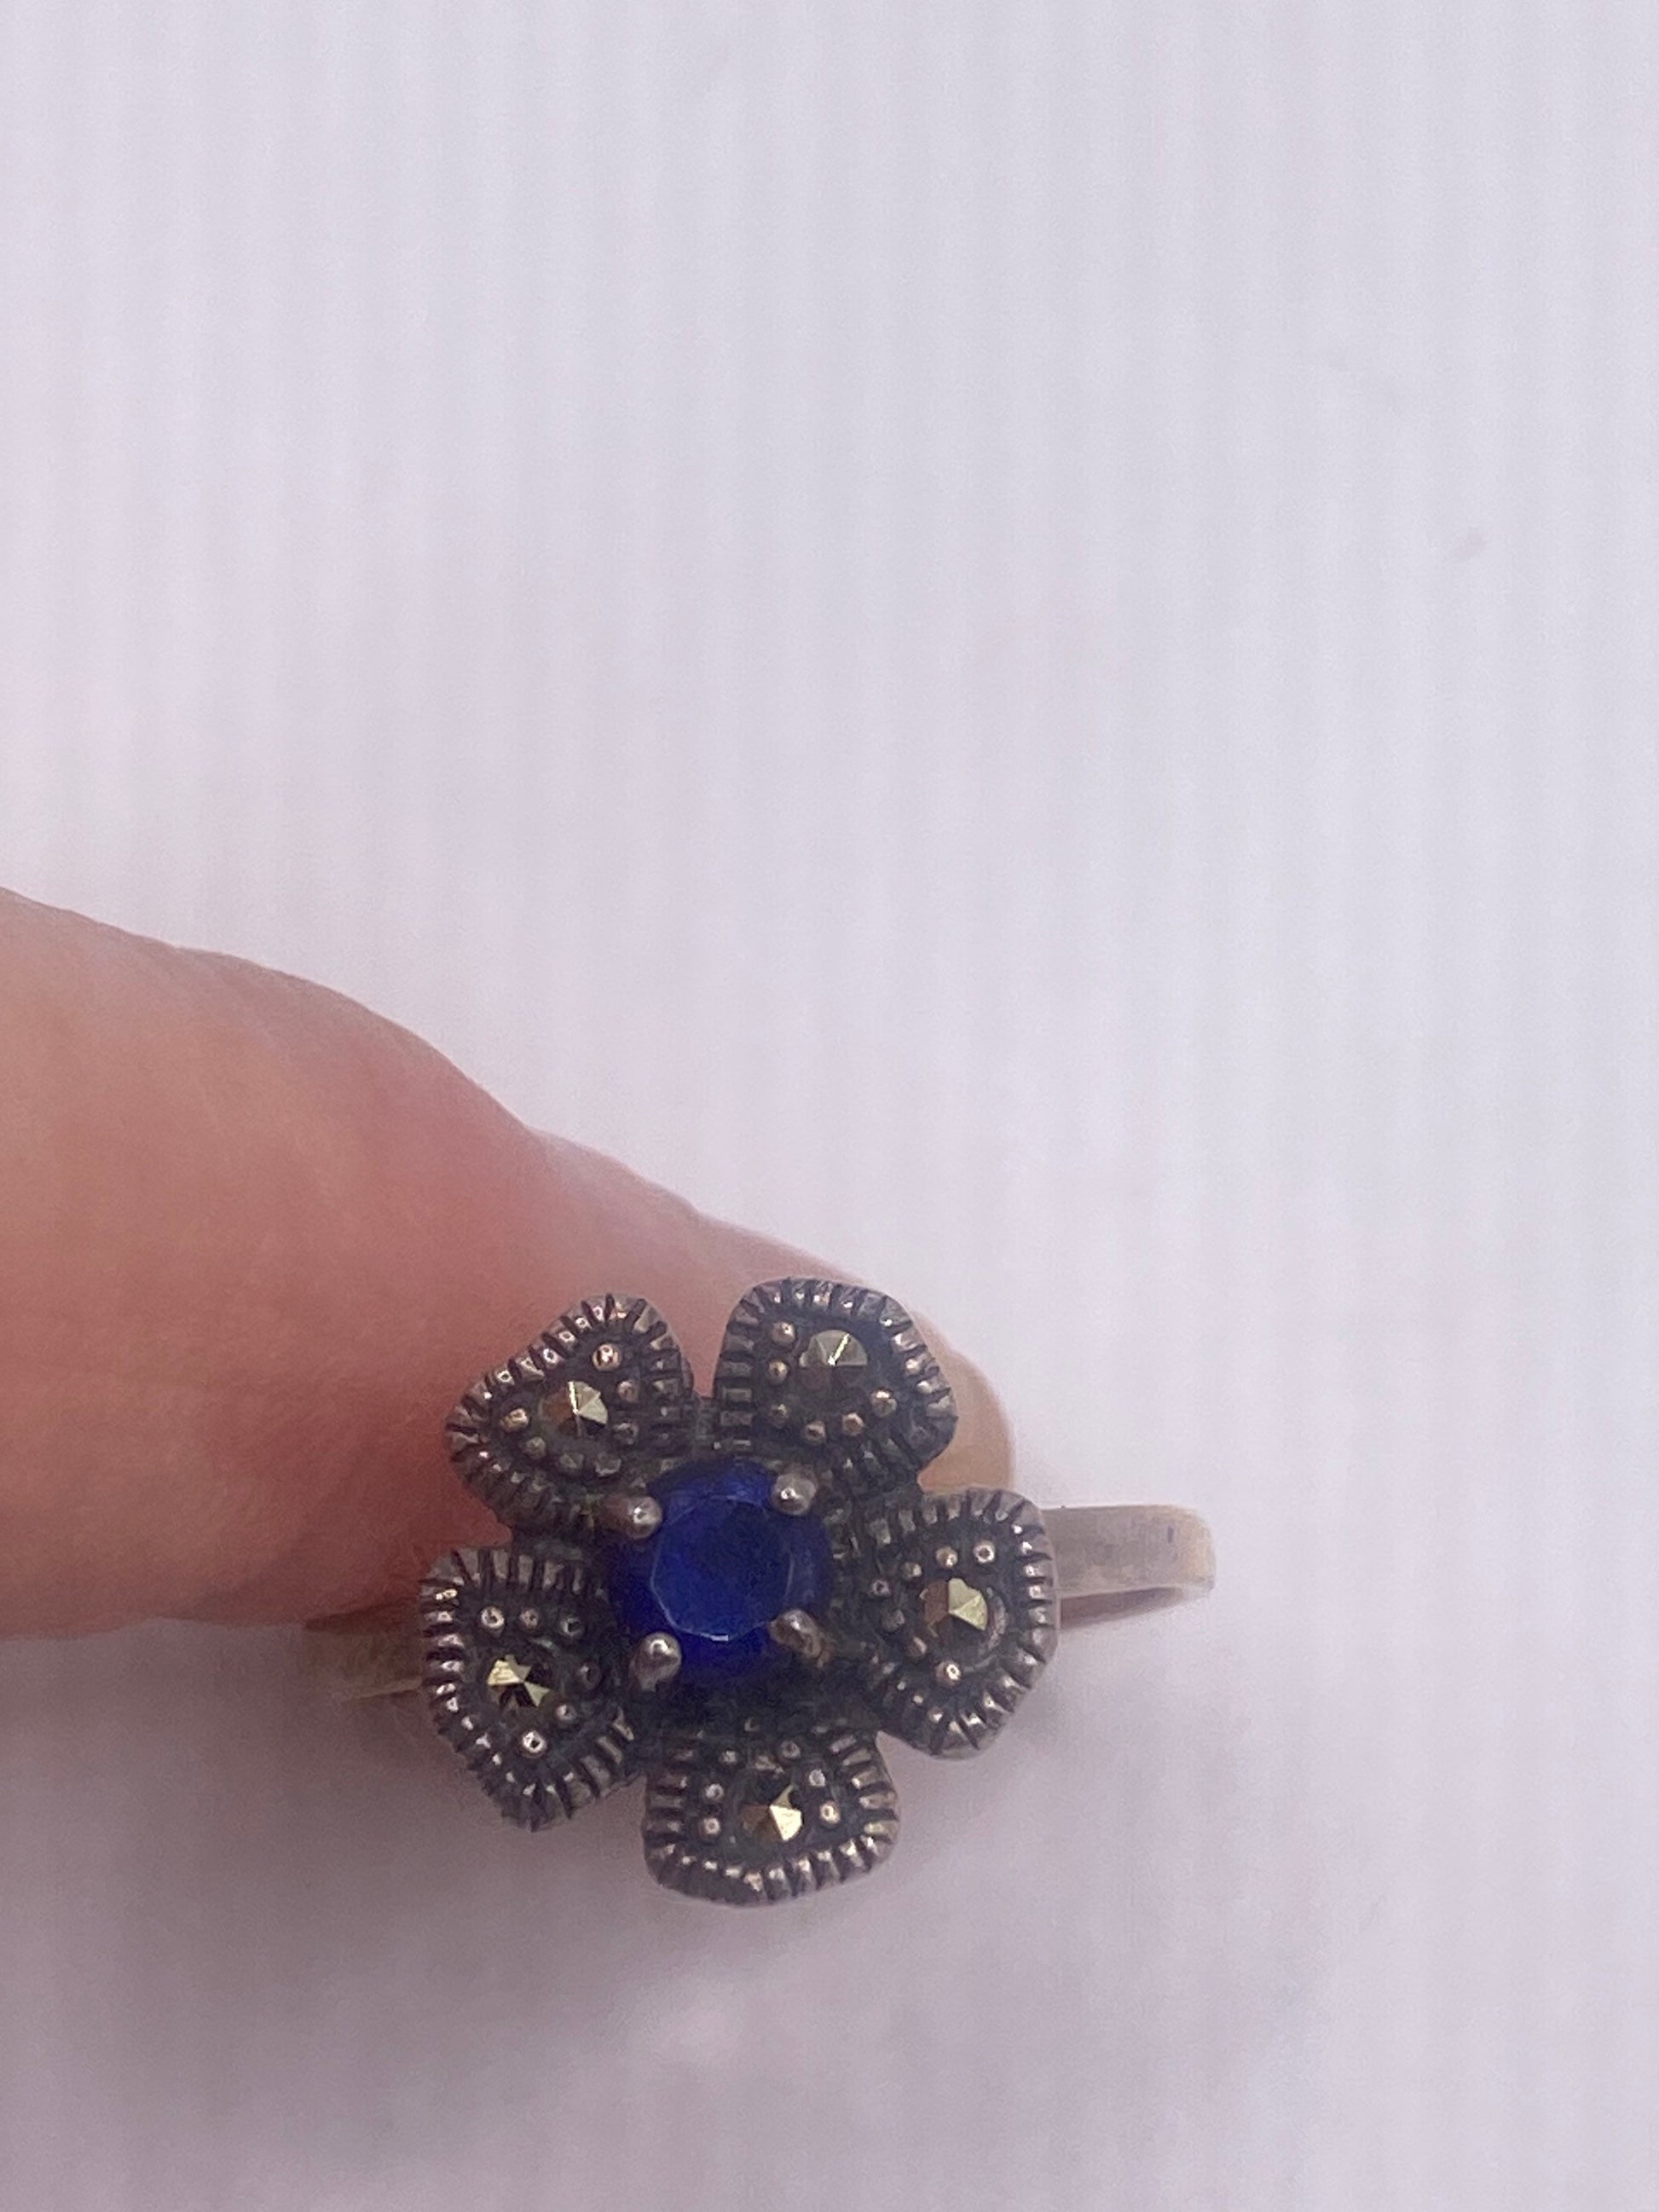 Vintage Blue Iolite Marcasite 925 Sterling Silver Ring Size 7